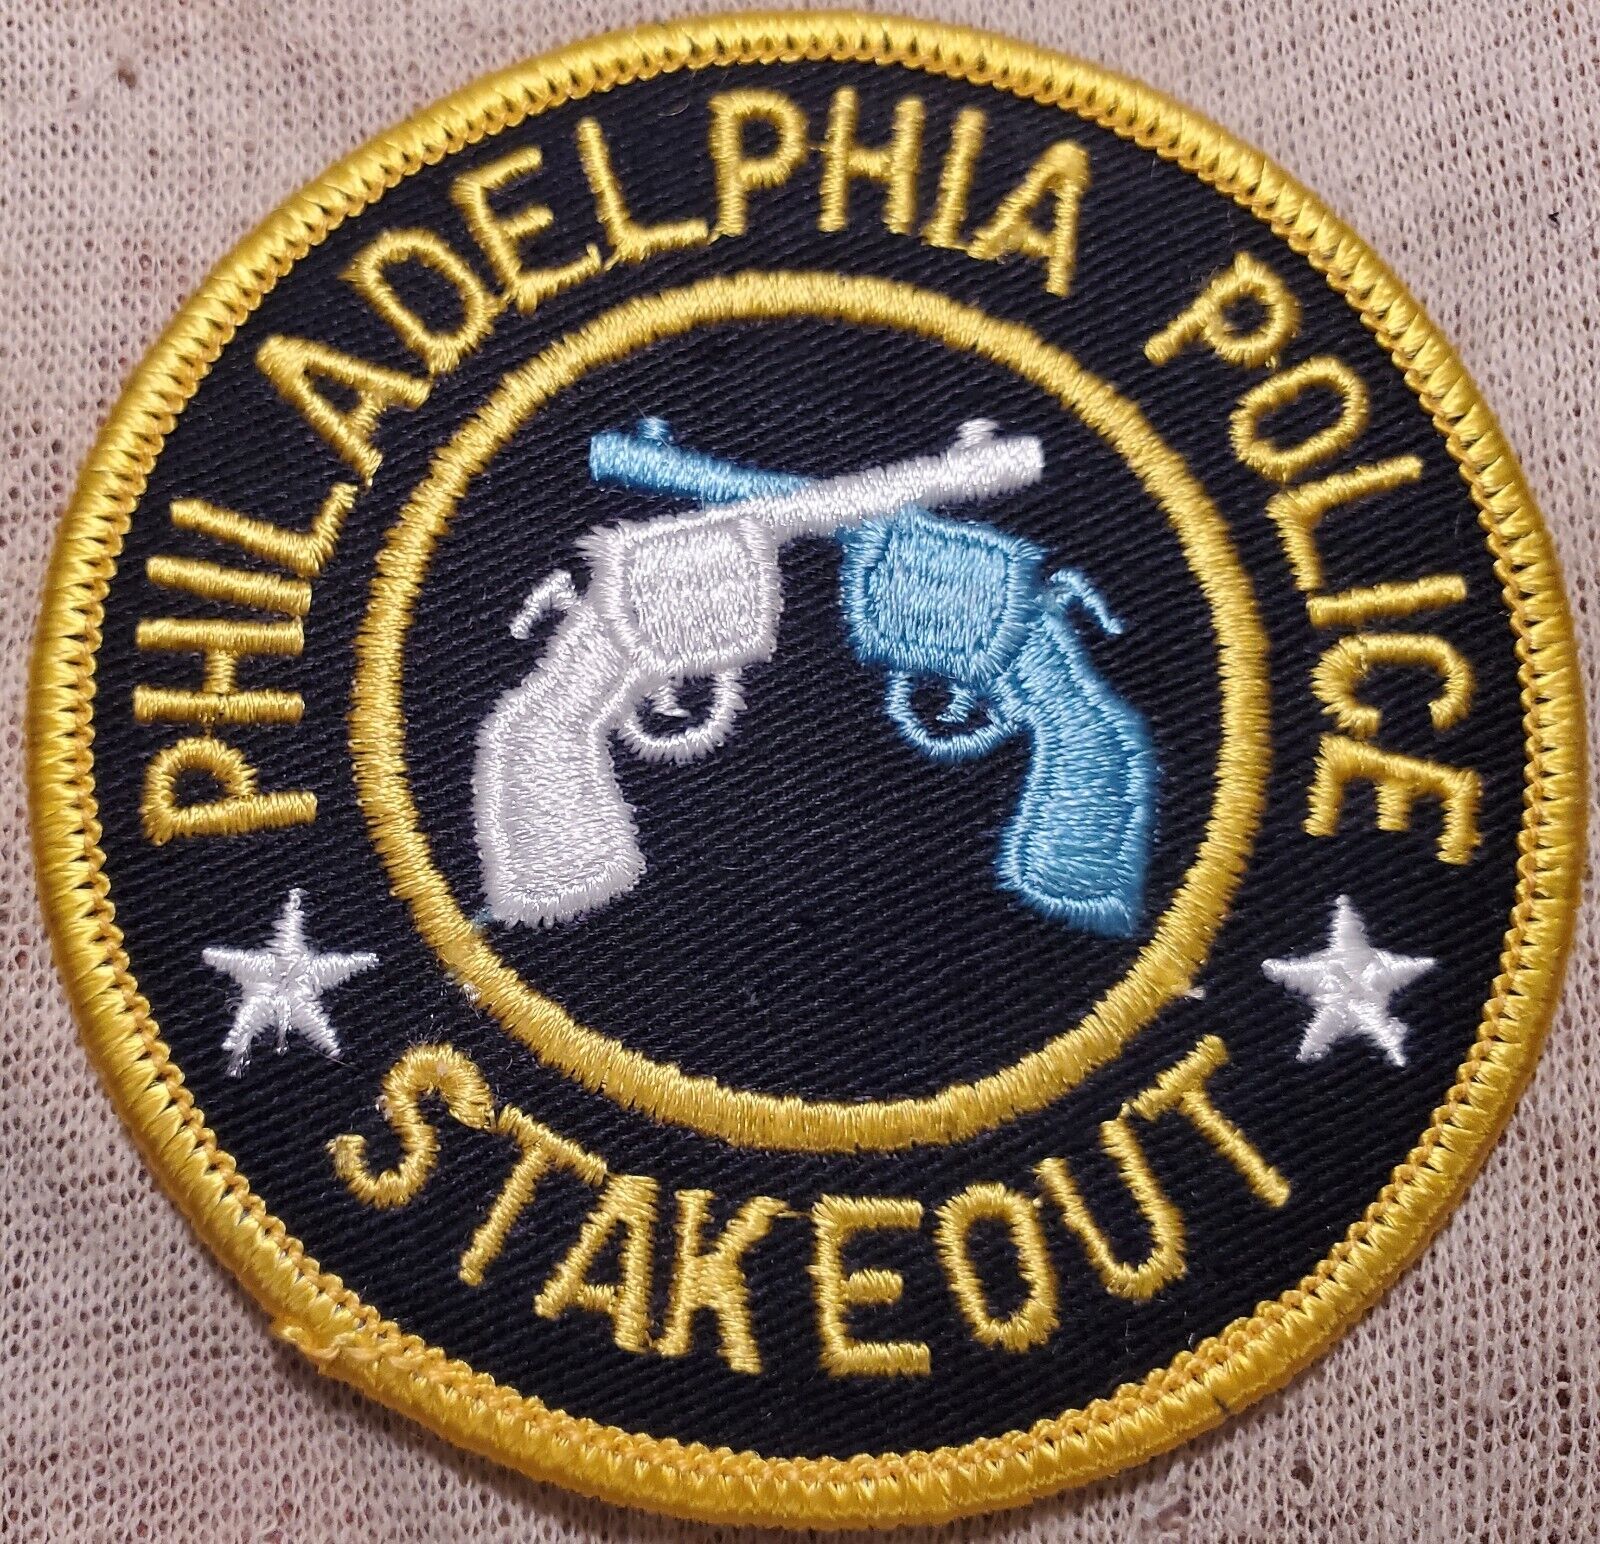 PA Philadelphia Pennsylvania Stakeout Police Patch